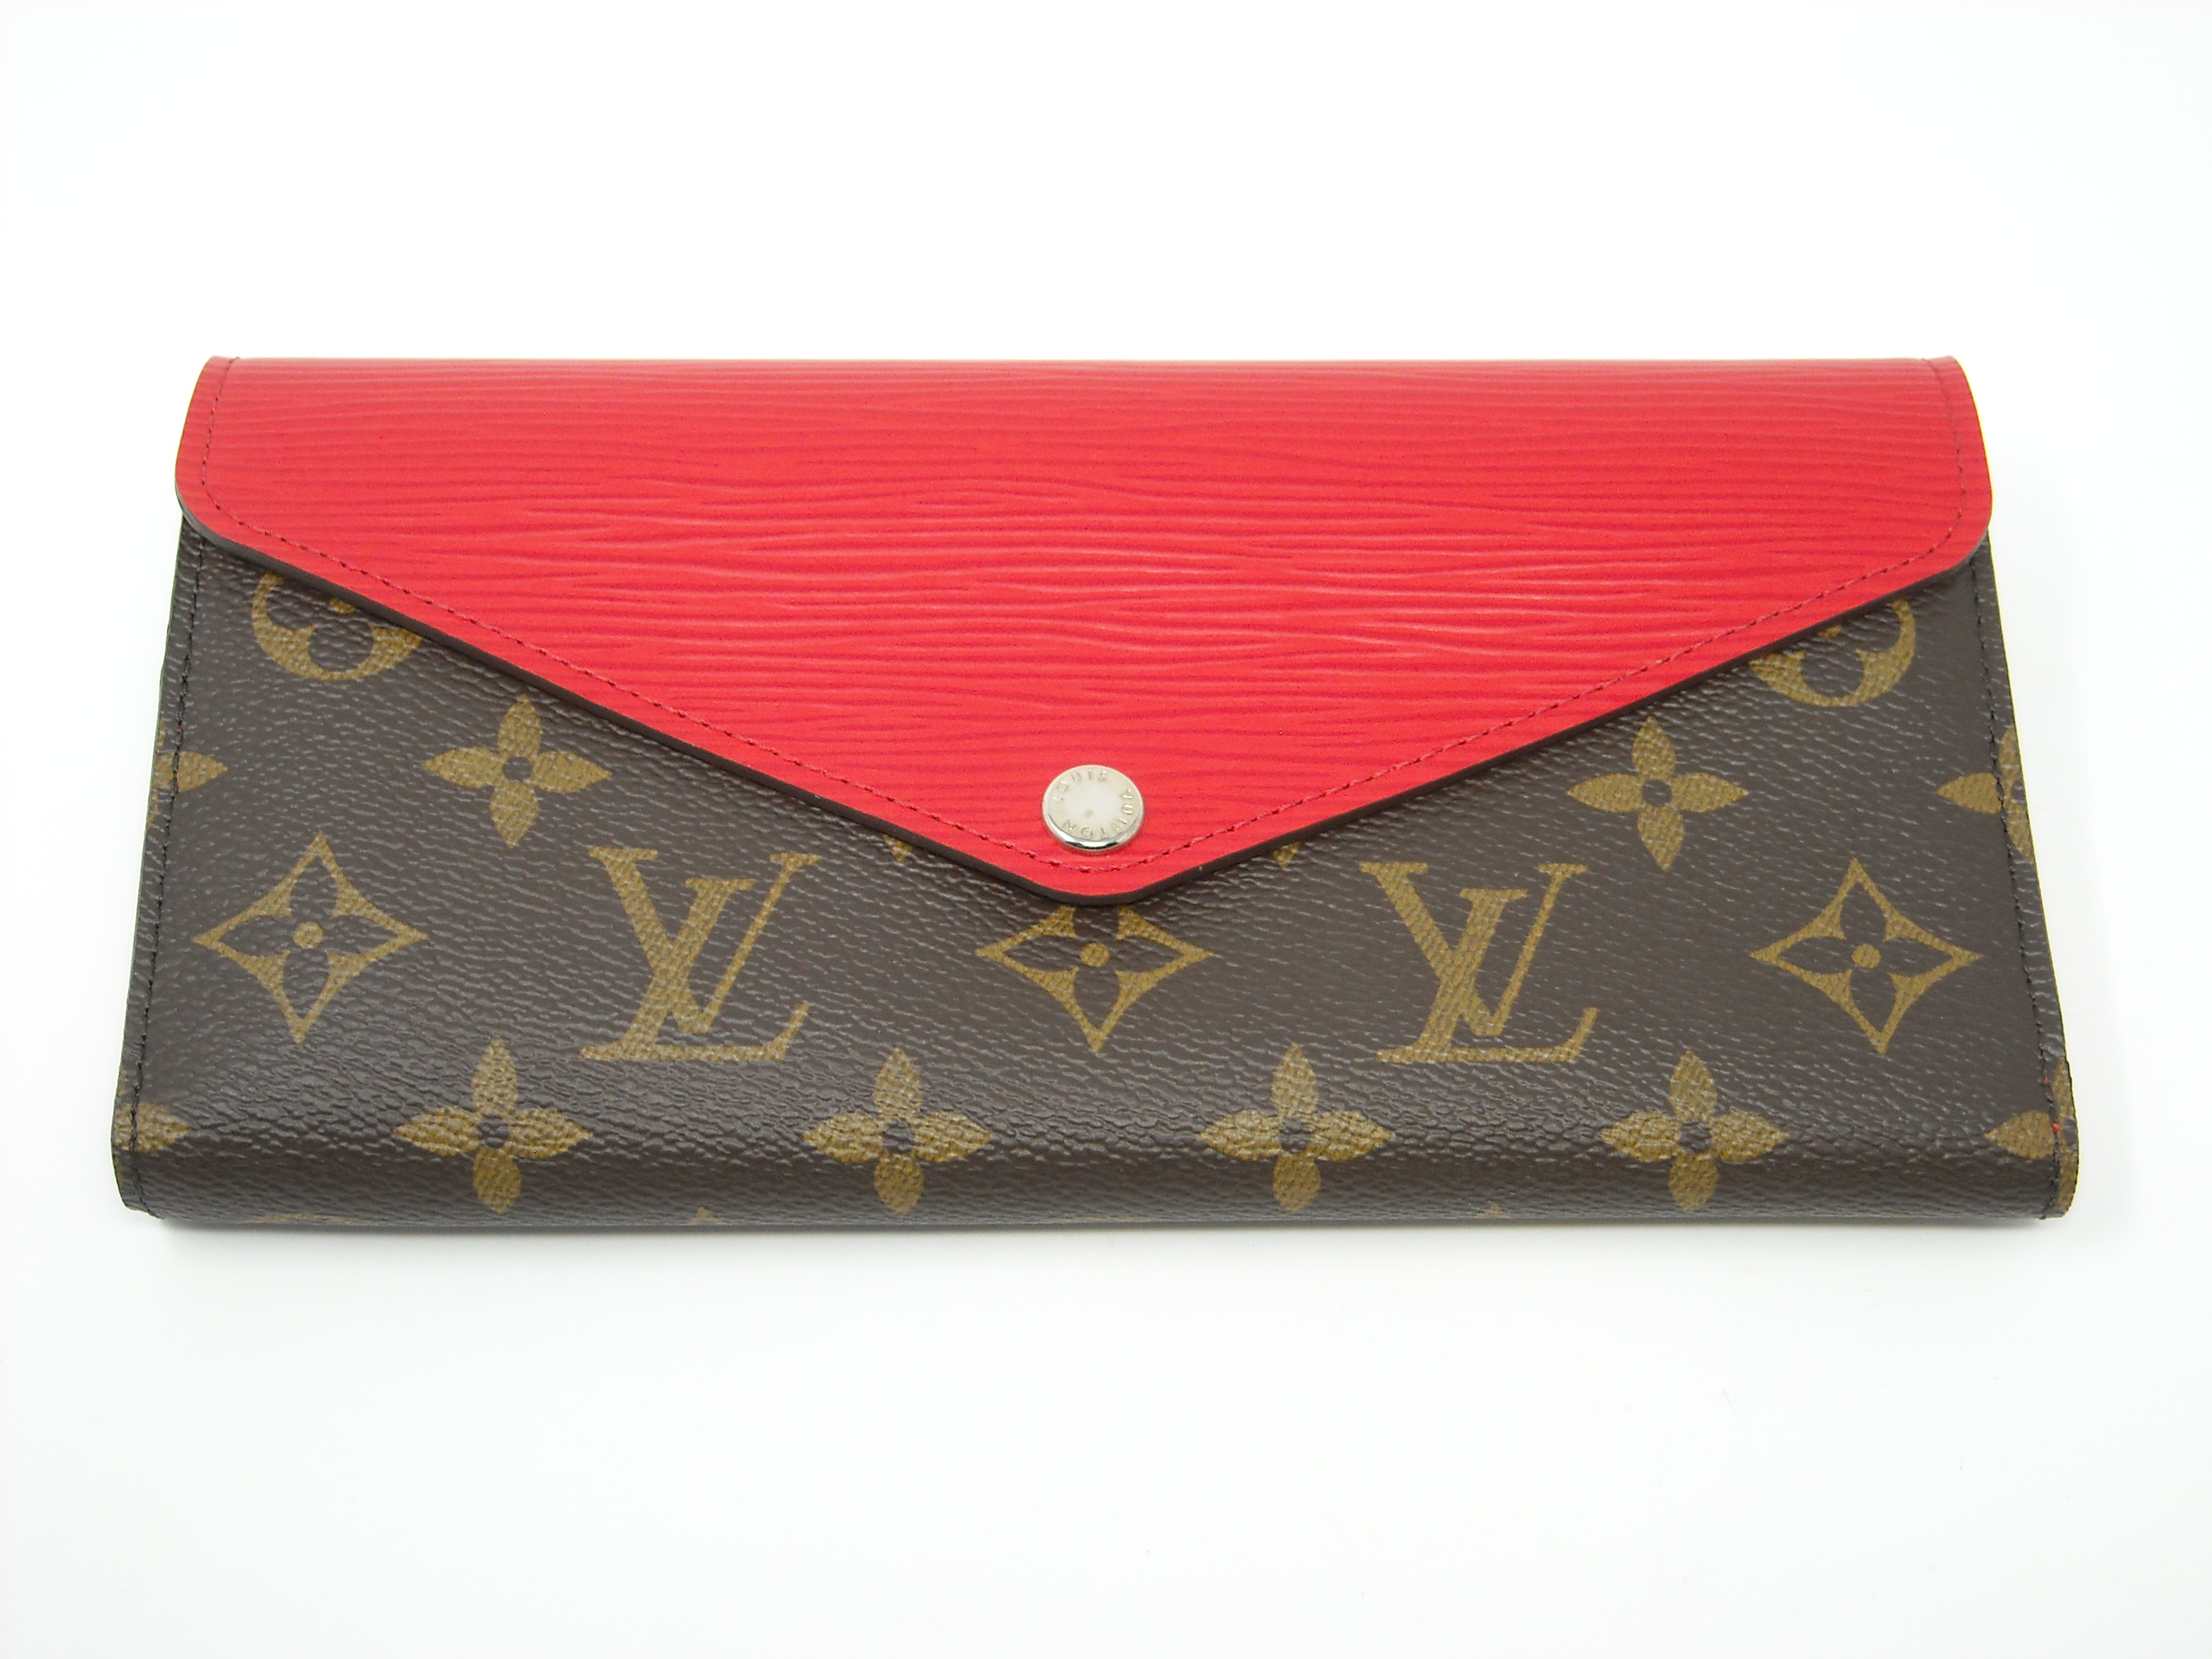 Louis Vuitton Wallet (Laredo, TX)